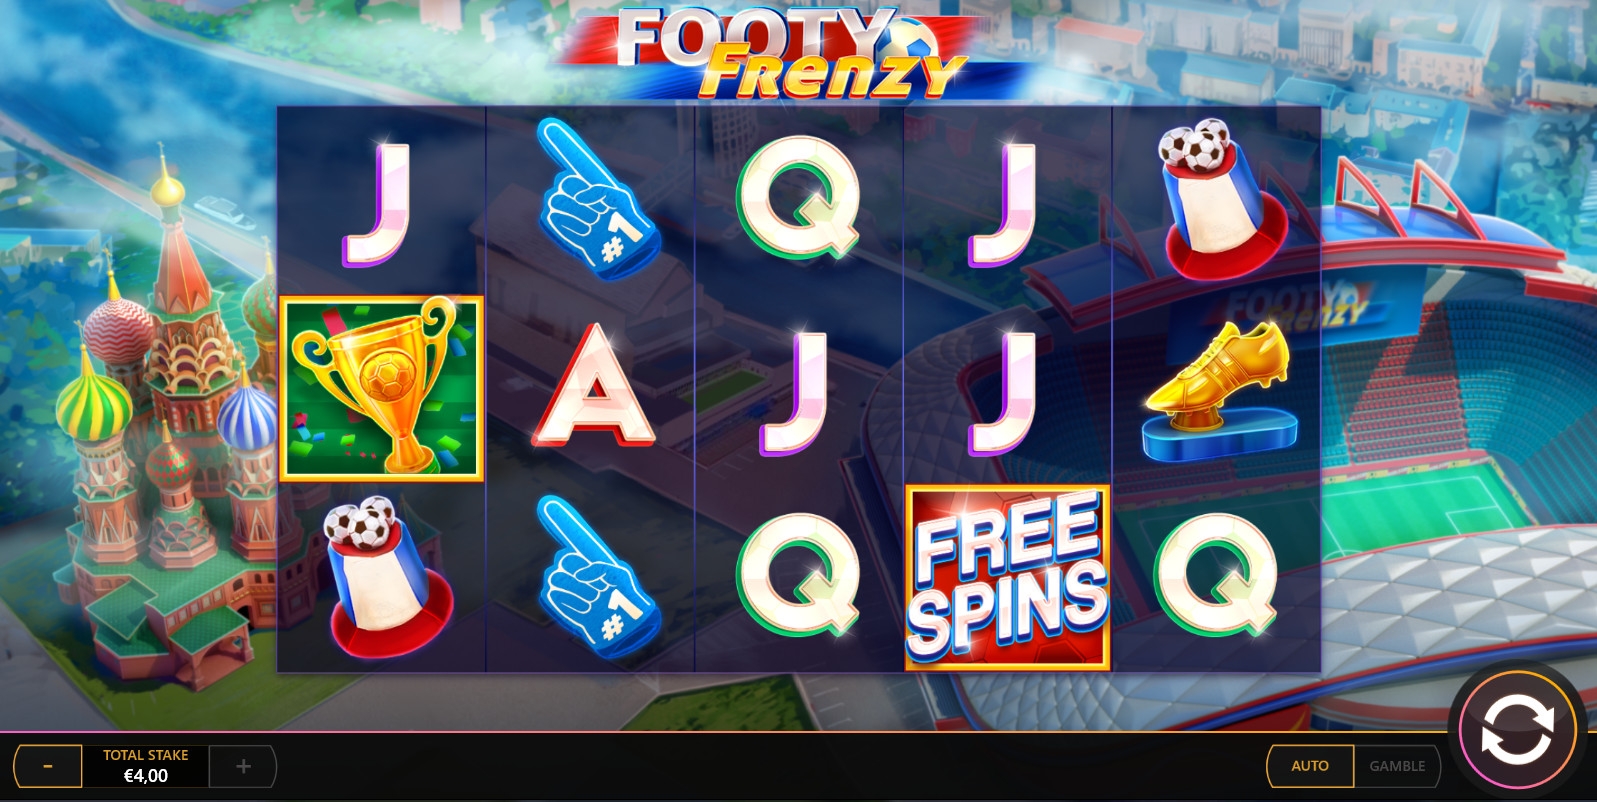 Footy Frenzy (Footy Frenzy) from category Slots